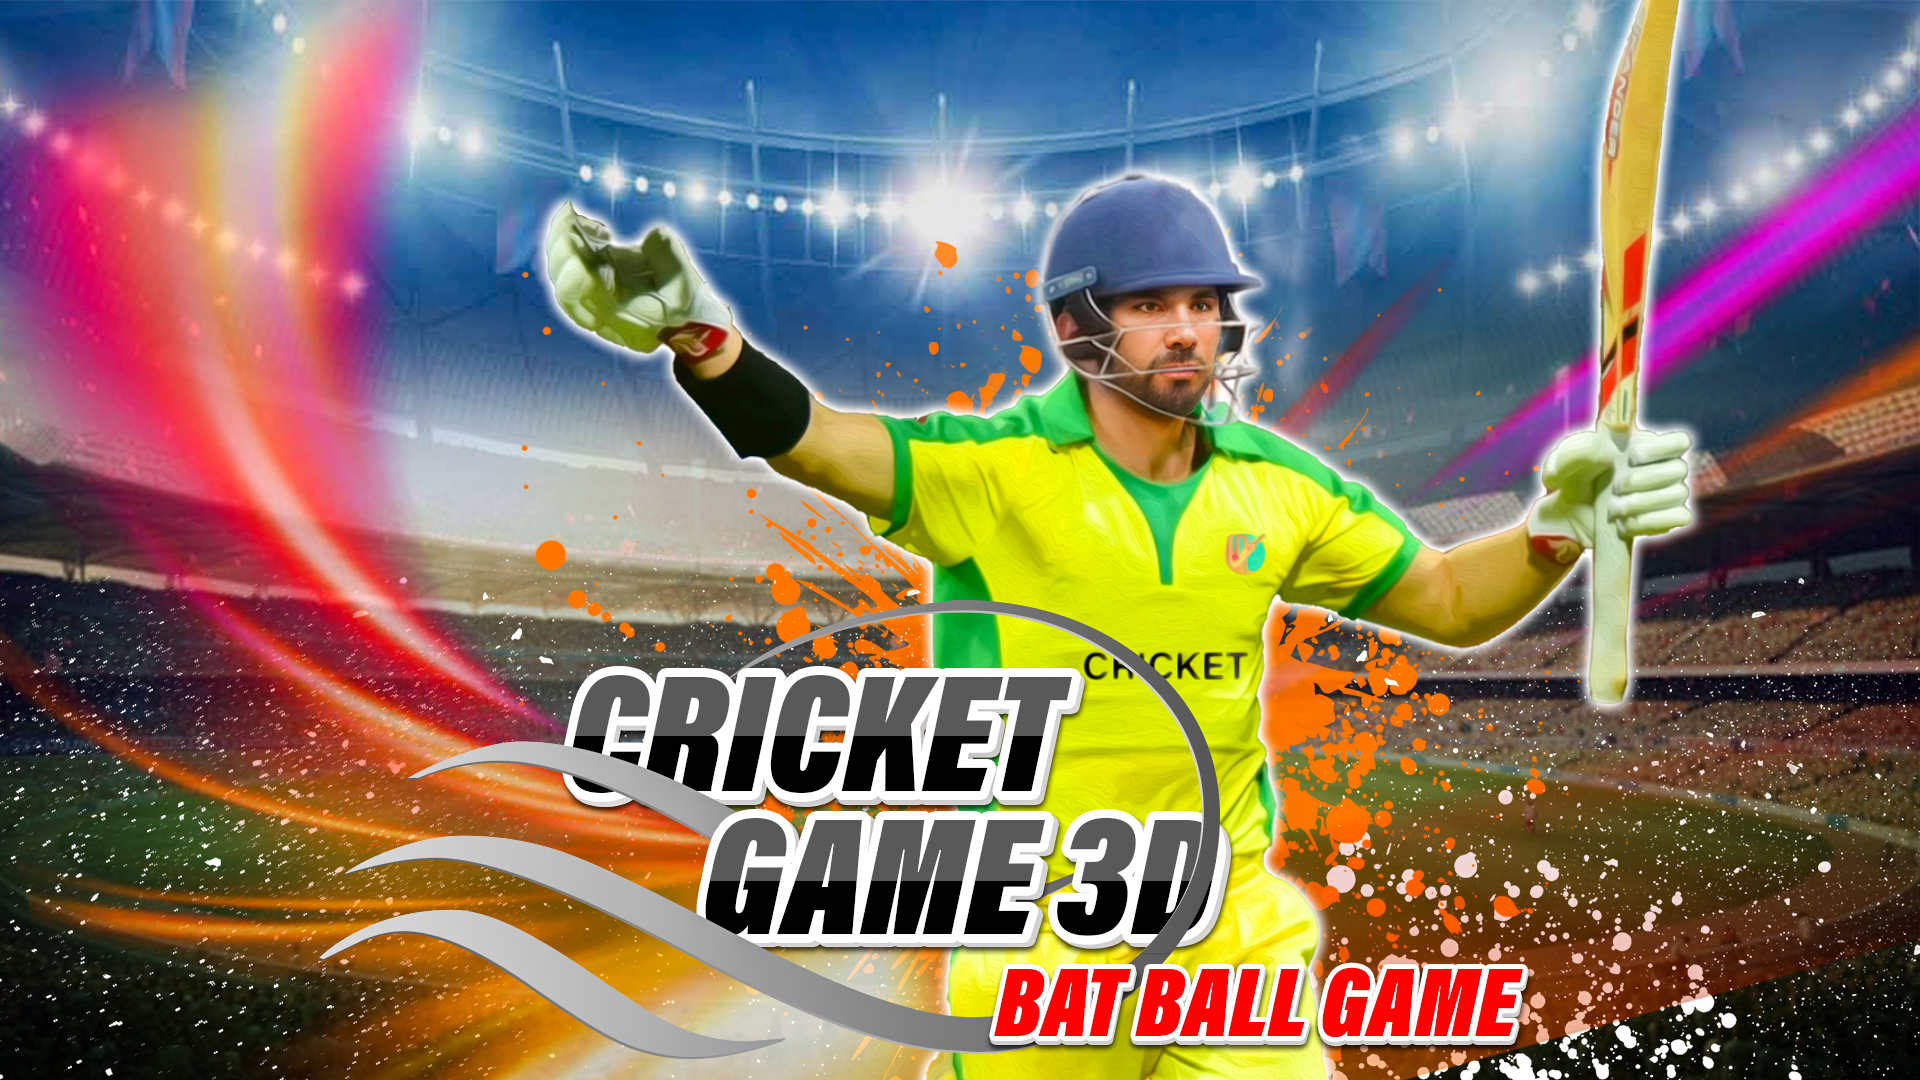 Screenshot 1 of क्रिकेट गेम 3डी: बैट बॉल गेम 1.1.1